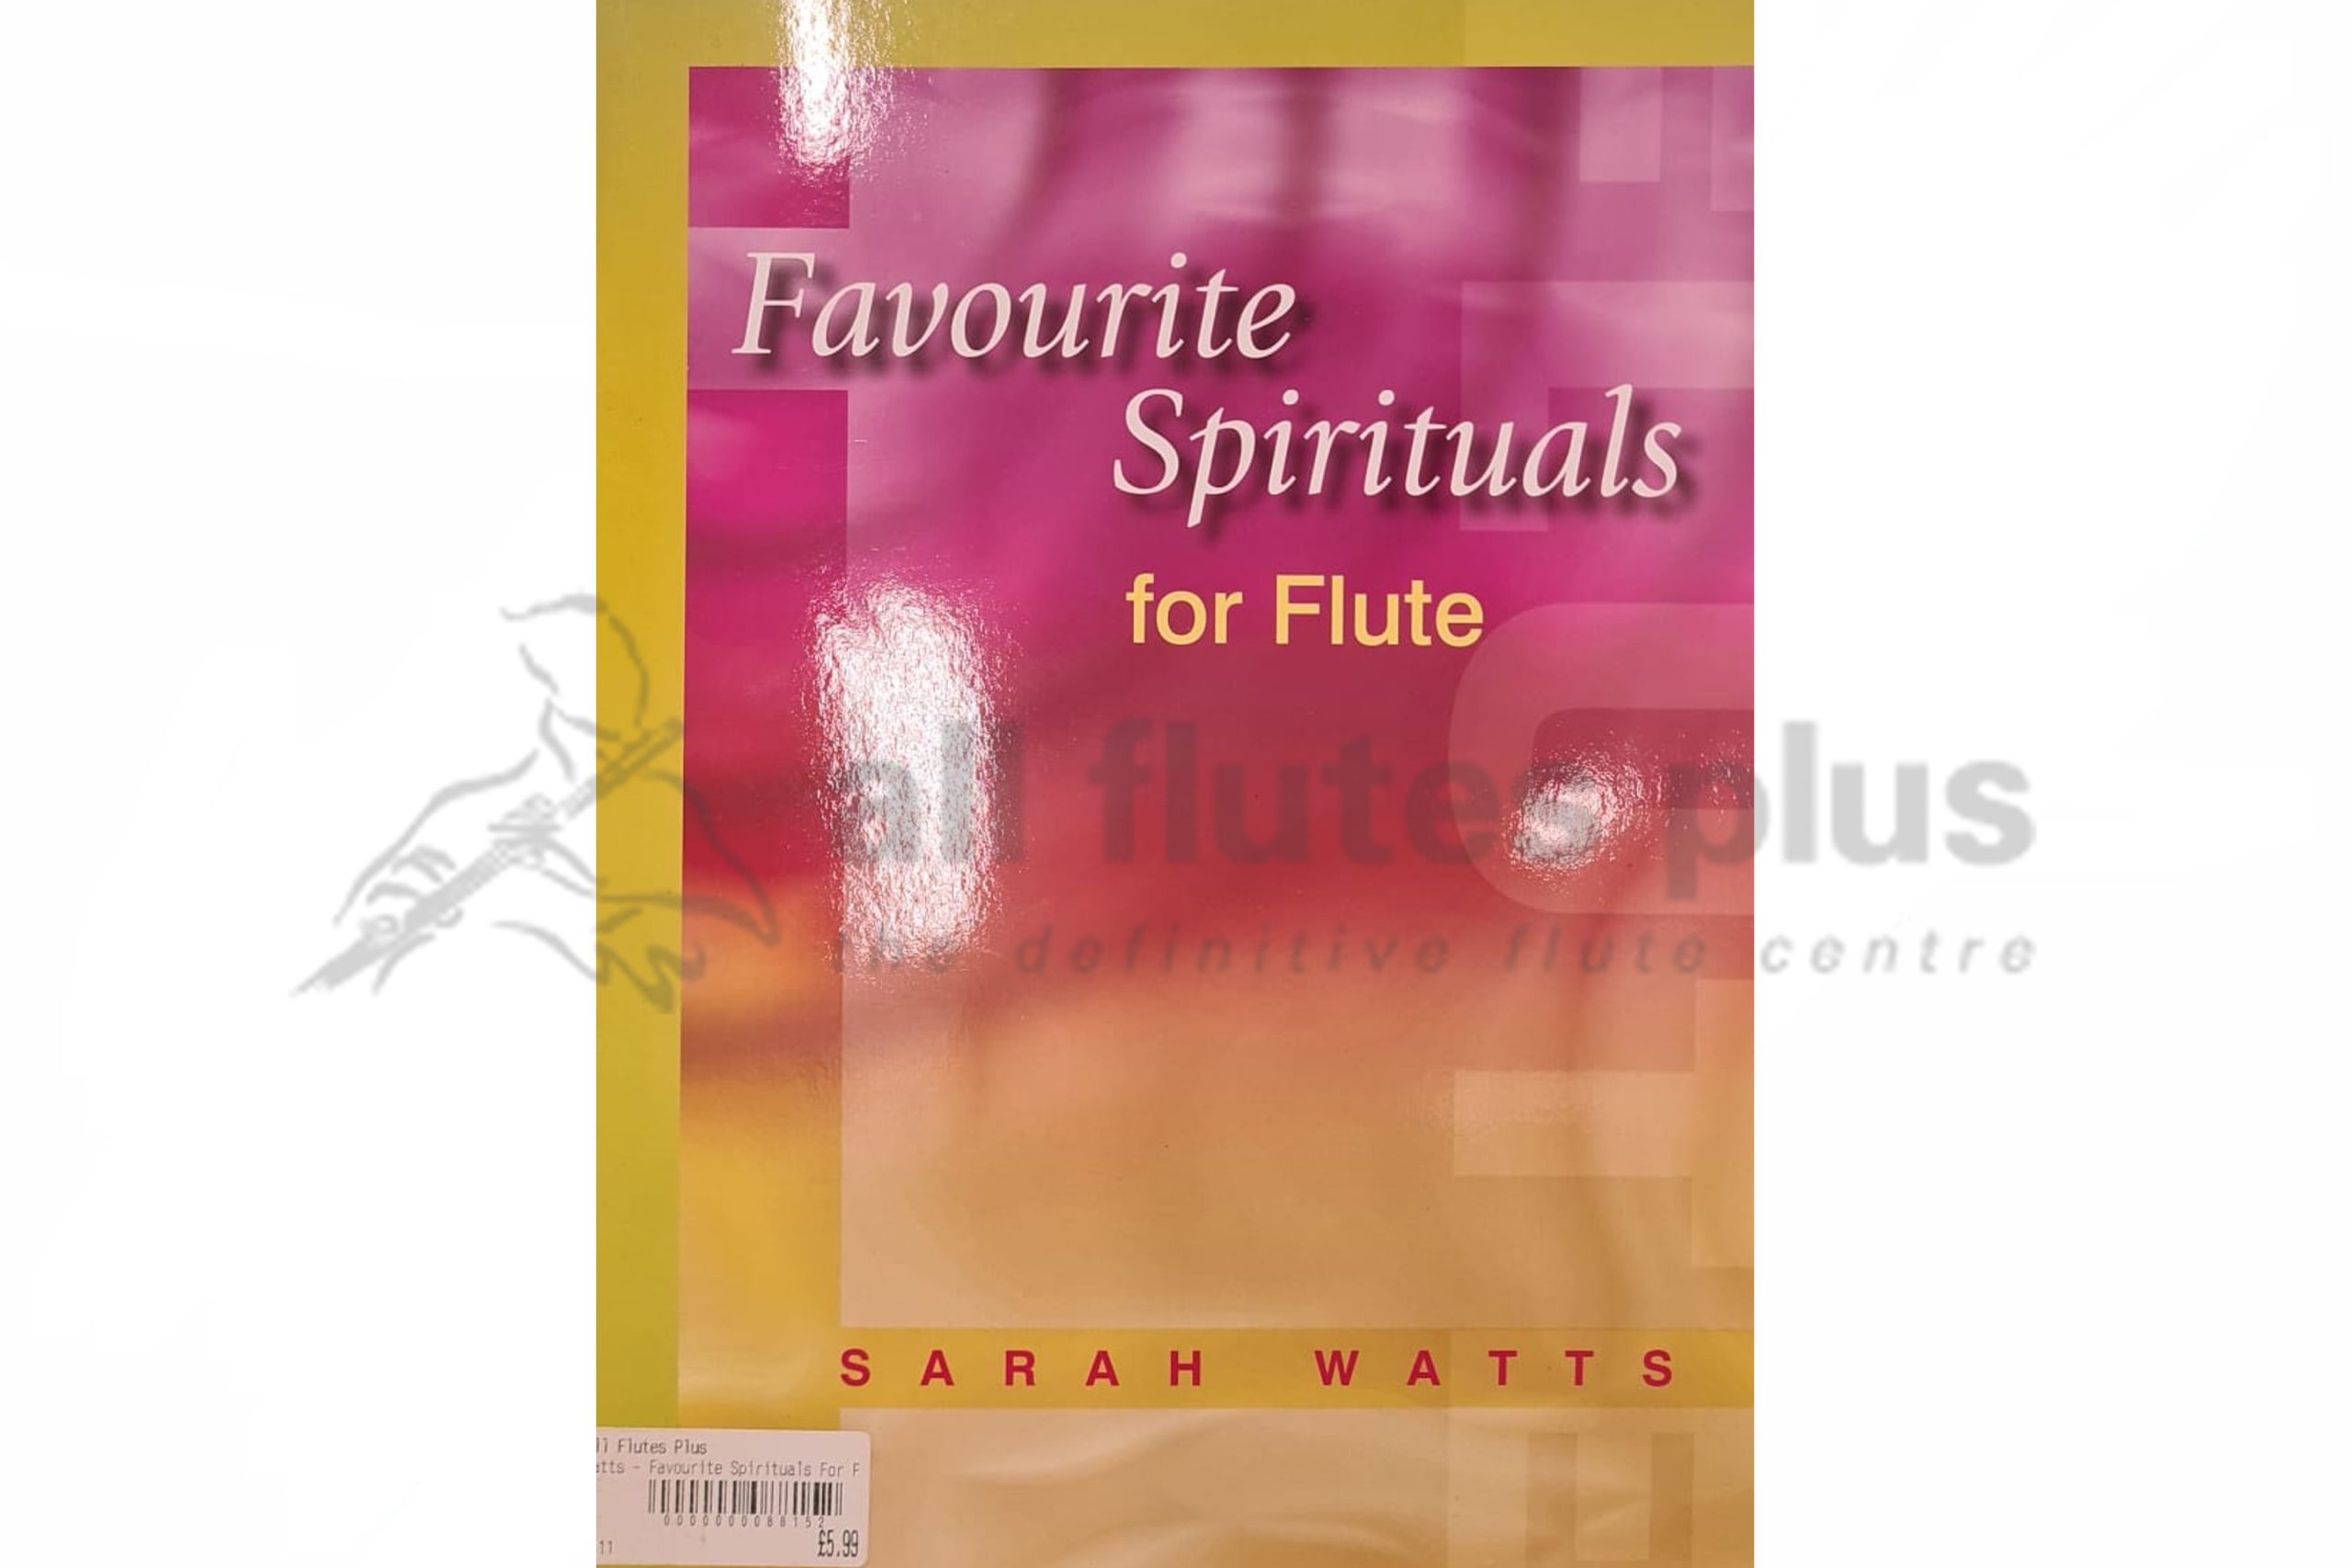 Favourite Spirituals for Flute